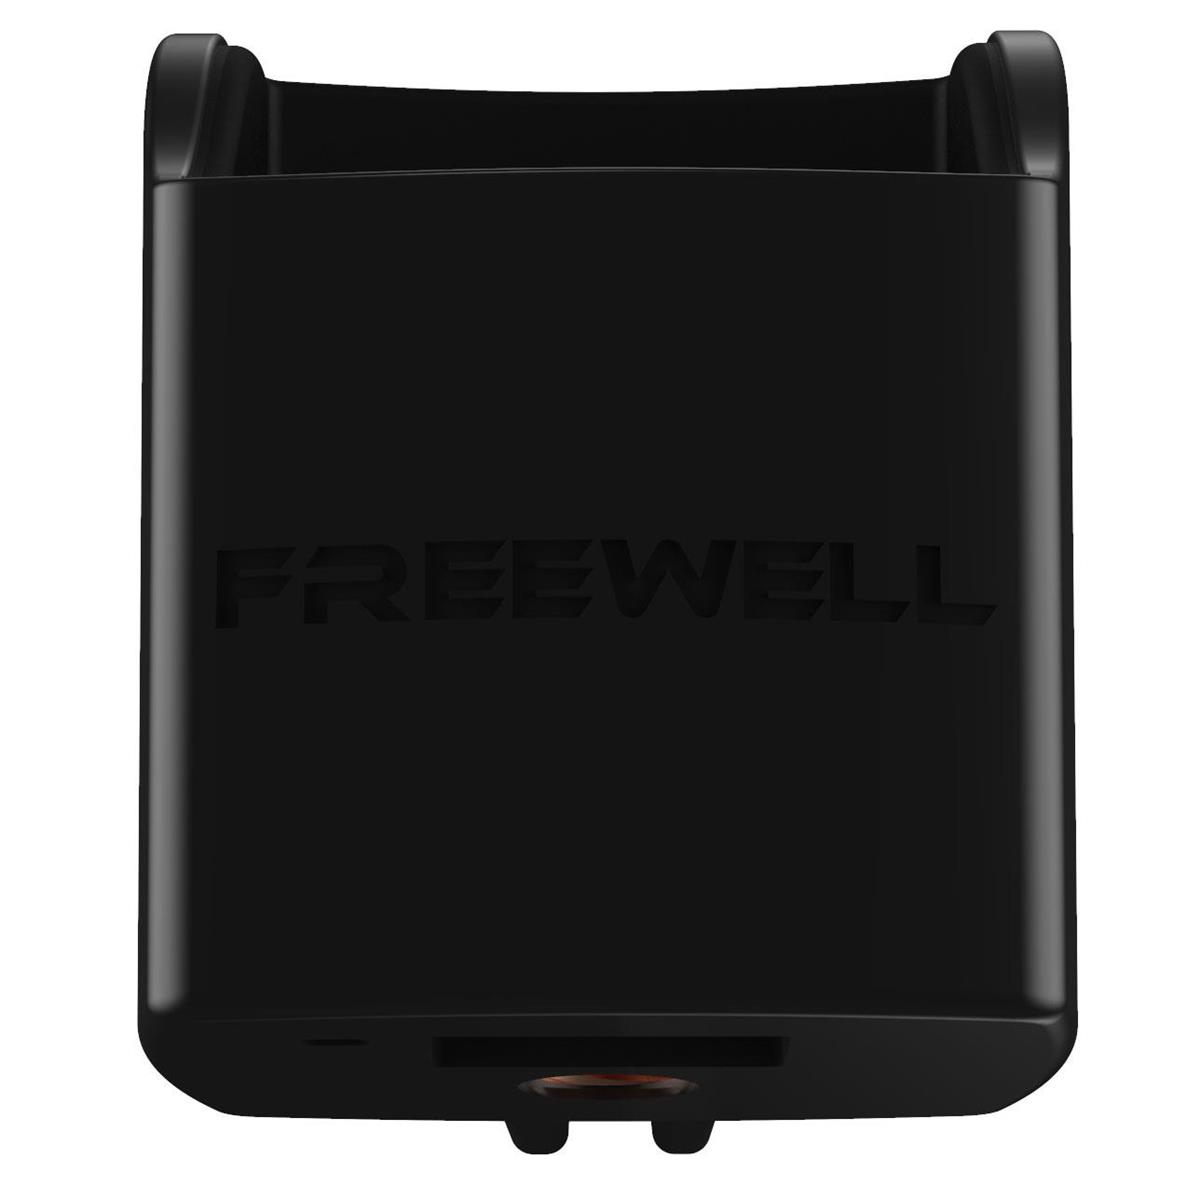 Image of Freewell Tripod Mount Adapter for DJI Osmo Pocket Gimbal Camera